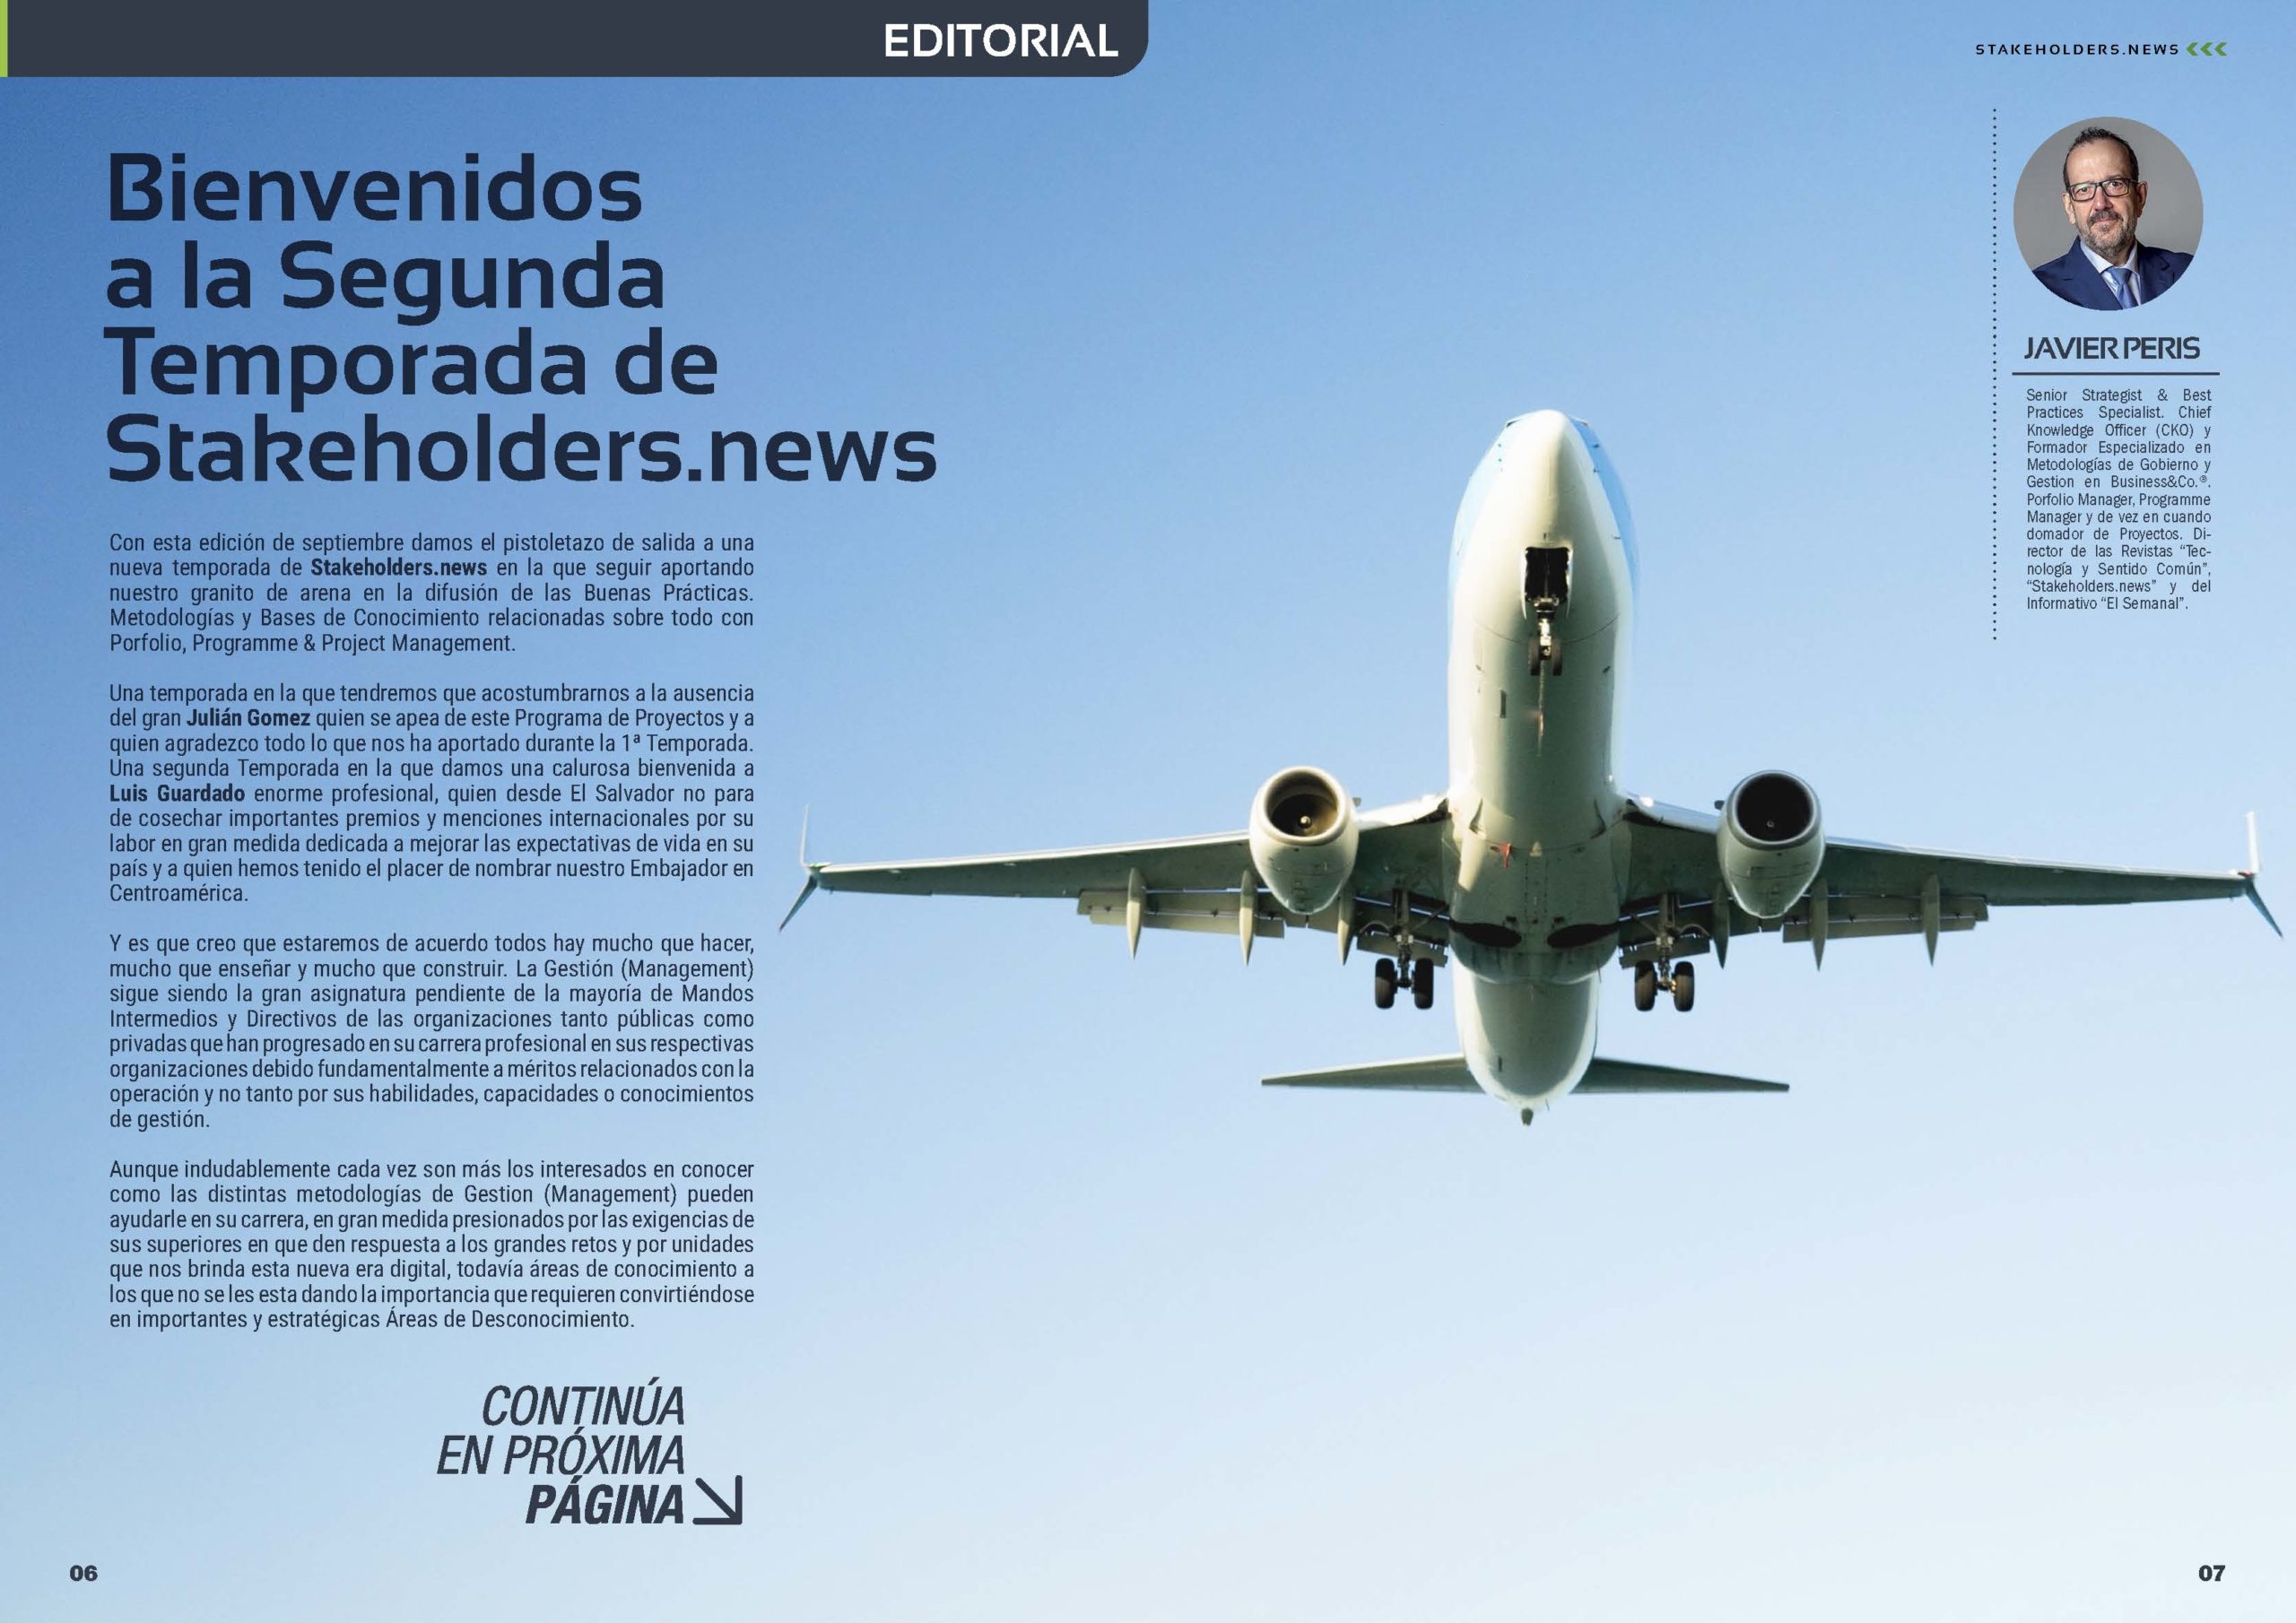 Editorial "Bienvenidos a la Segunda Temporada de Stakeholders.news" de Javier Peris en la Revista Stakeholders.news